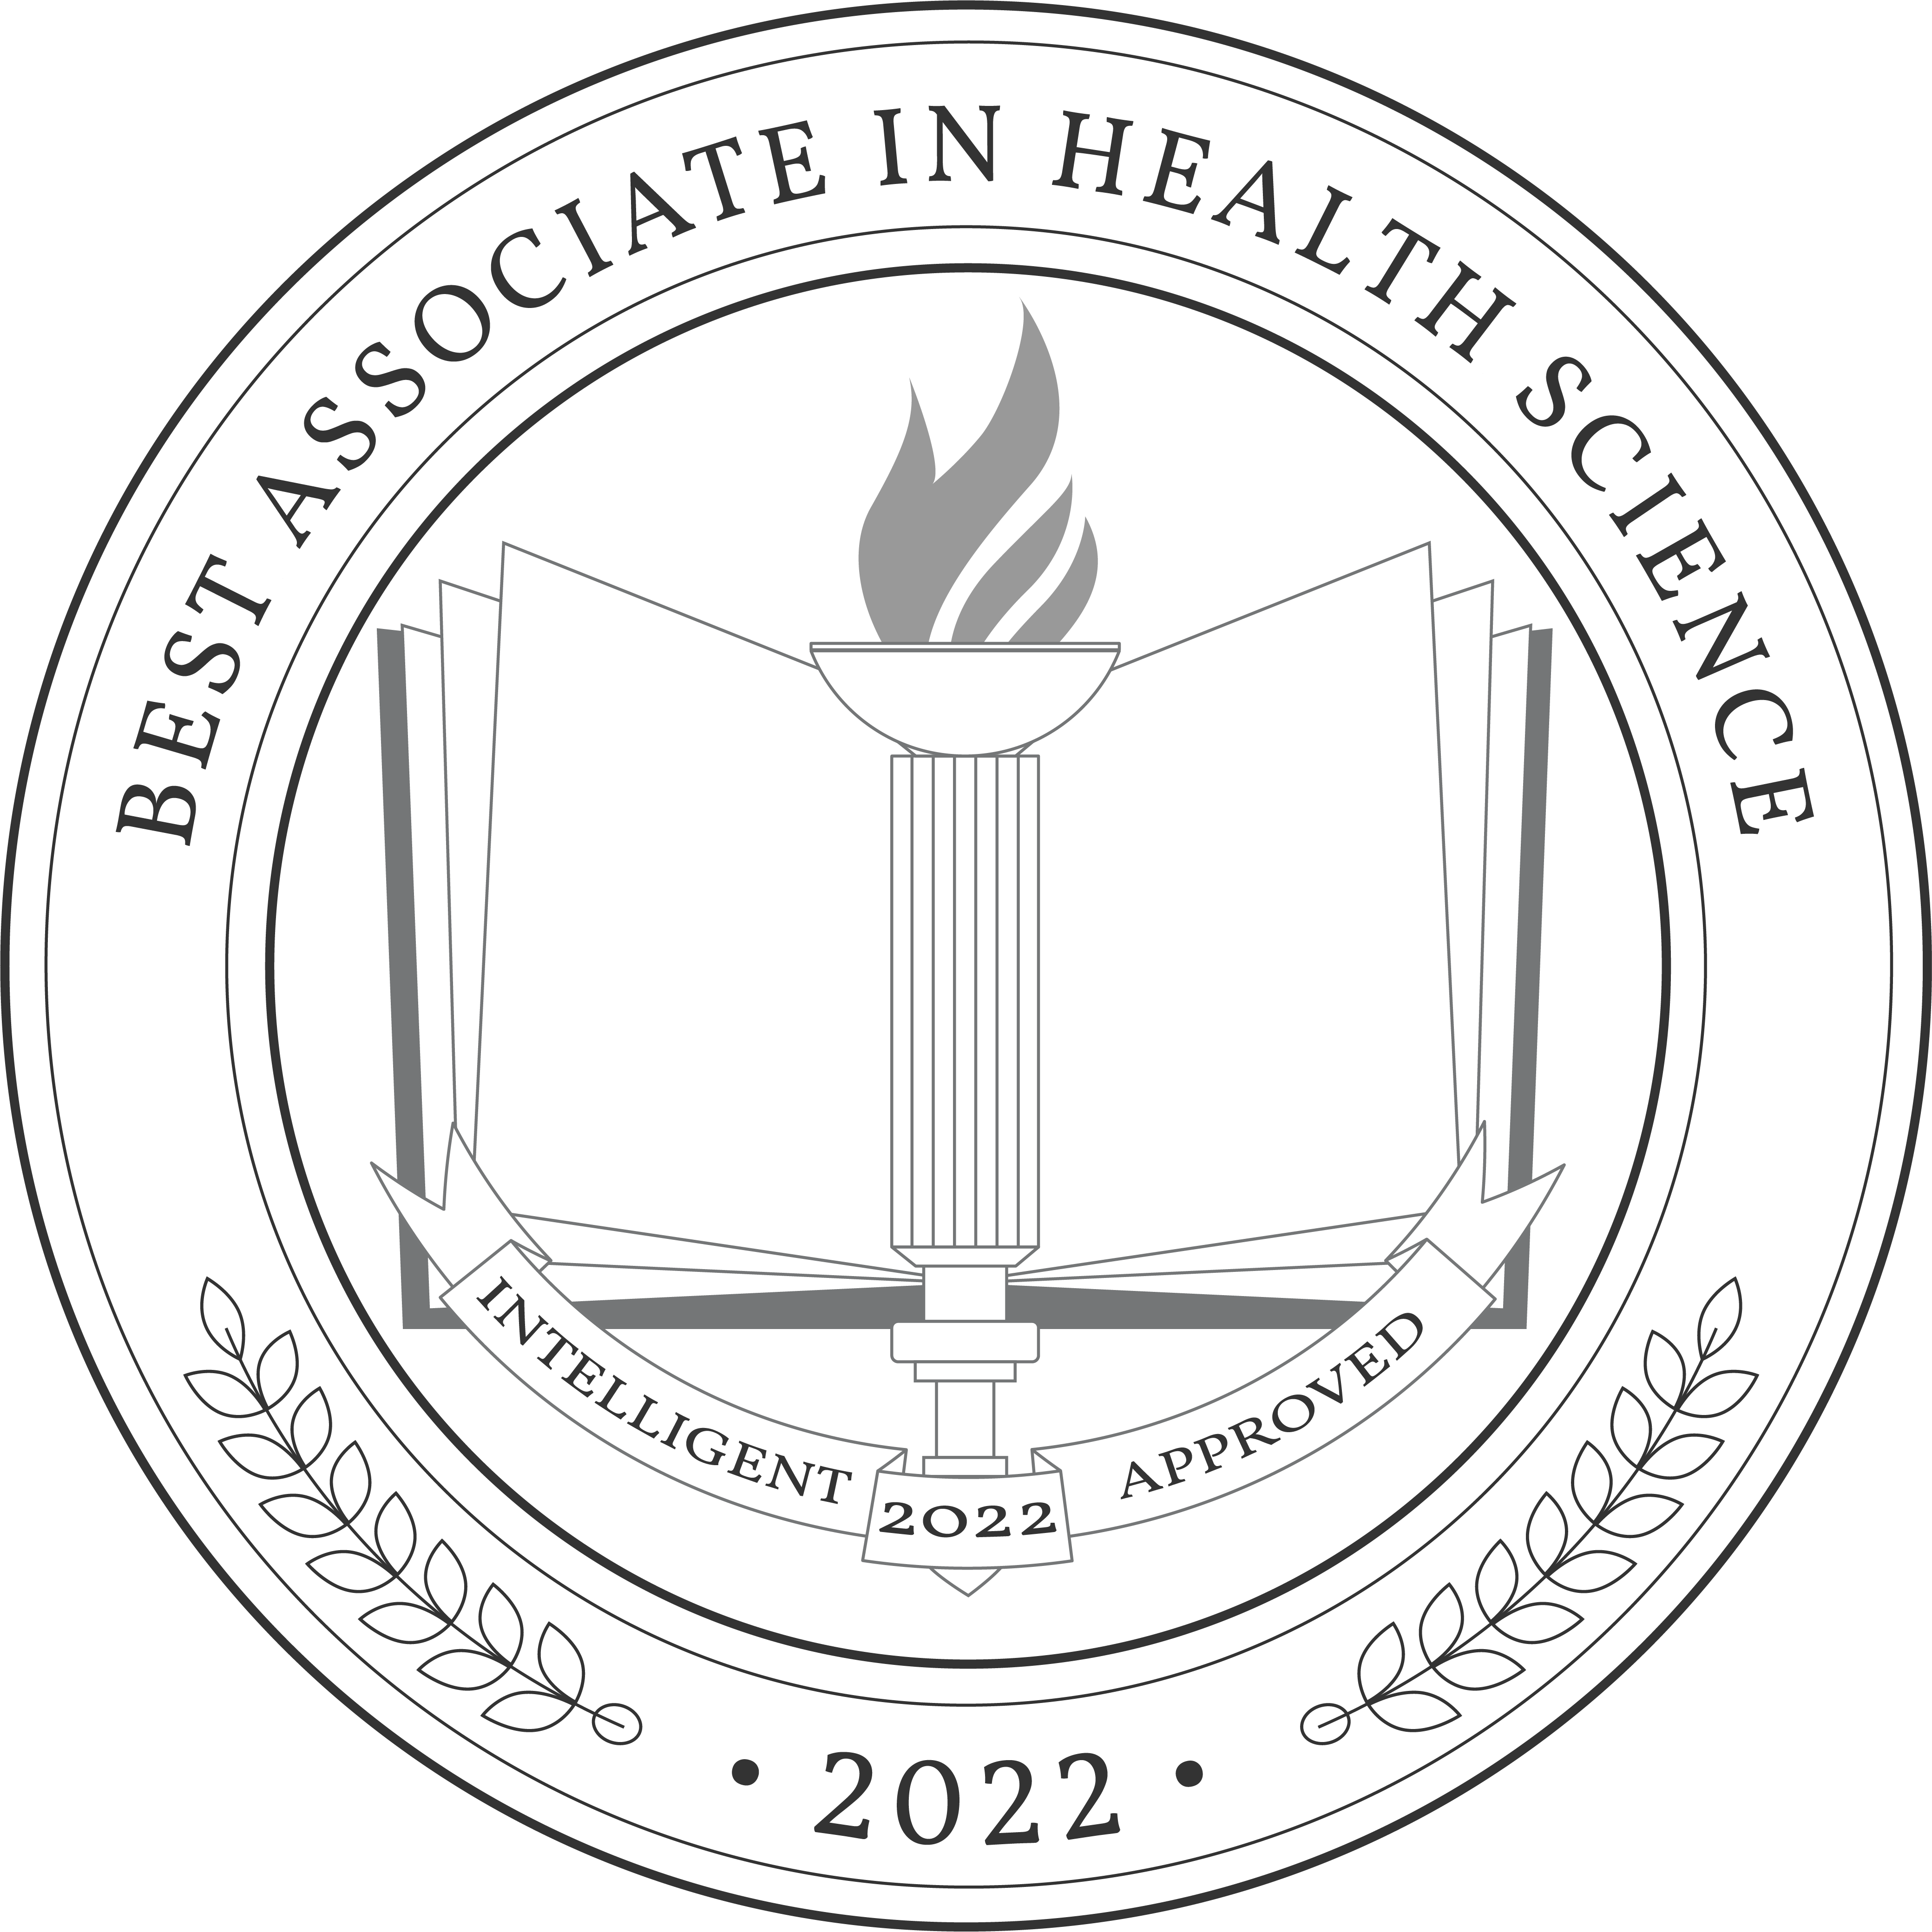 Best Online Associate in Health Science Programs Badge